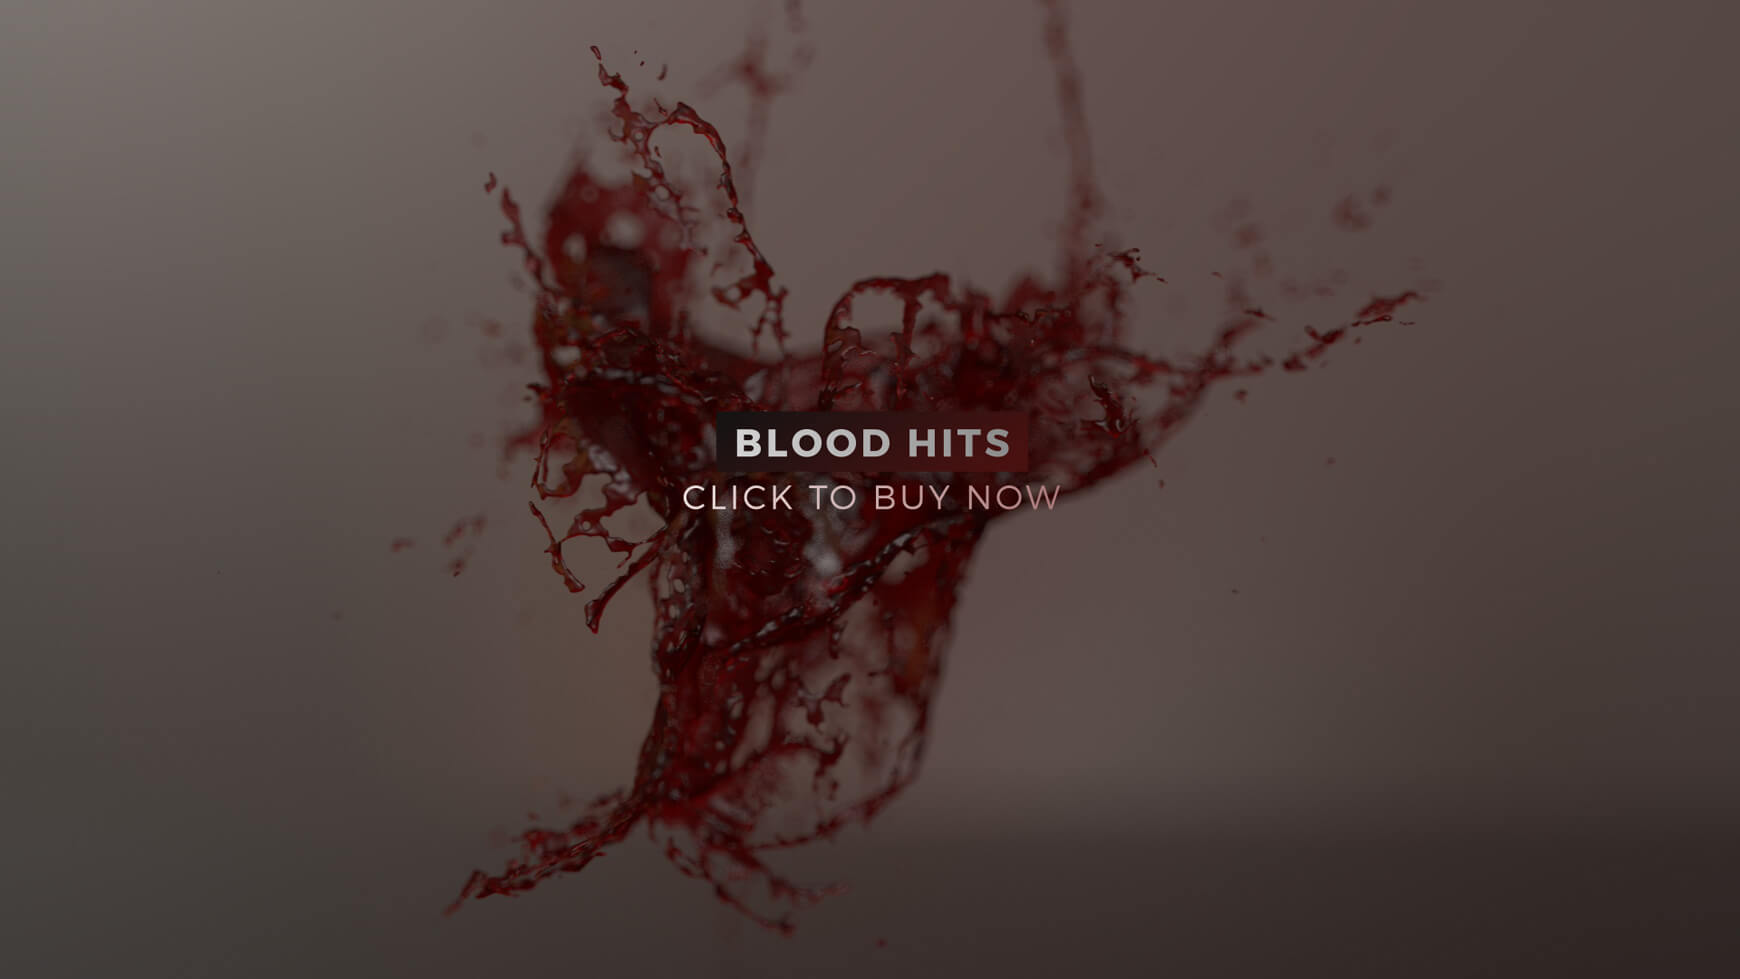 VFX Elements Volume 3 Blood Hits